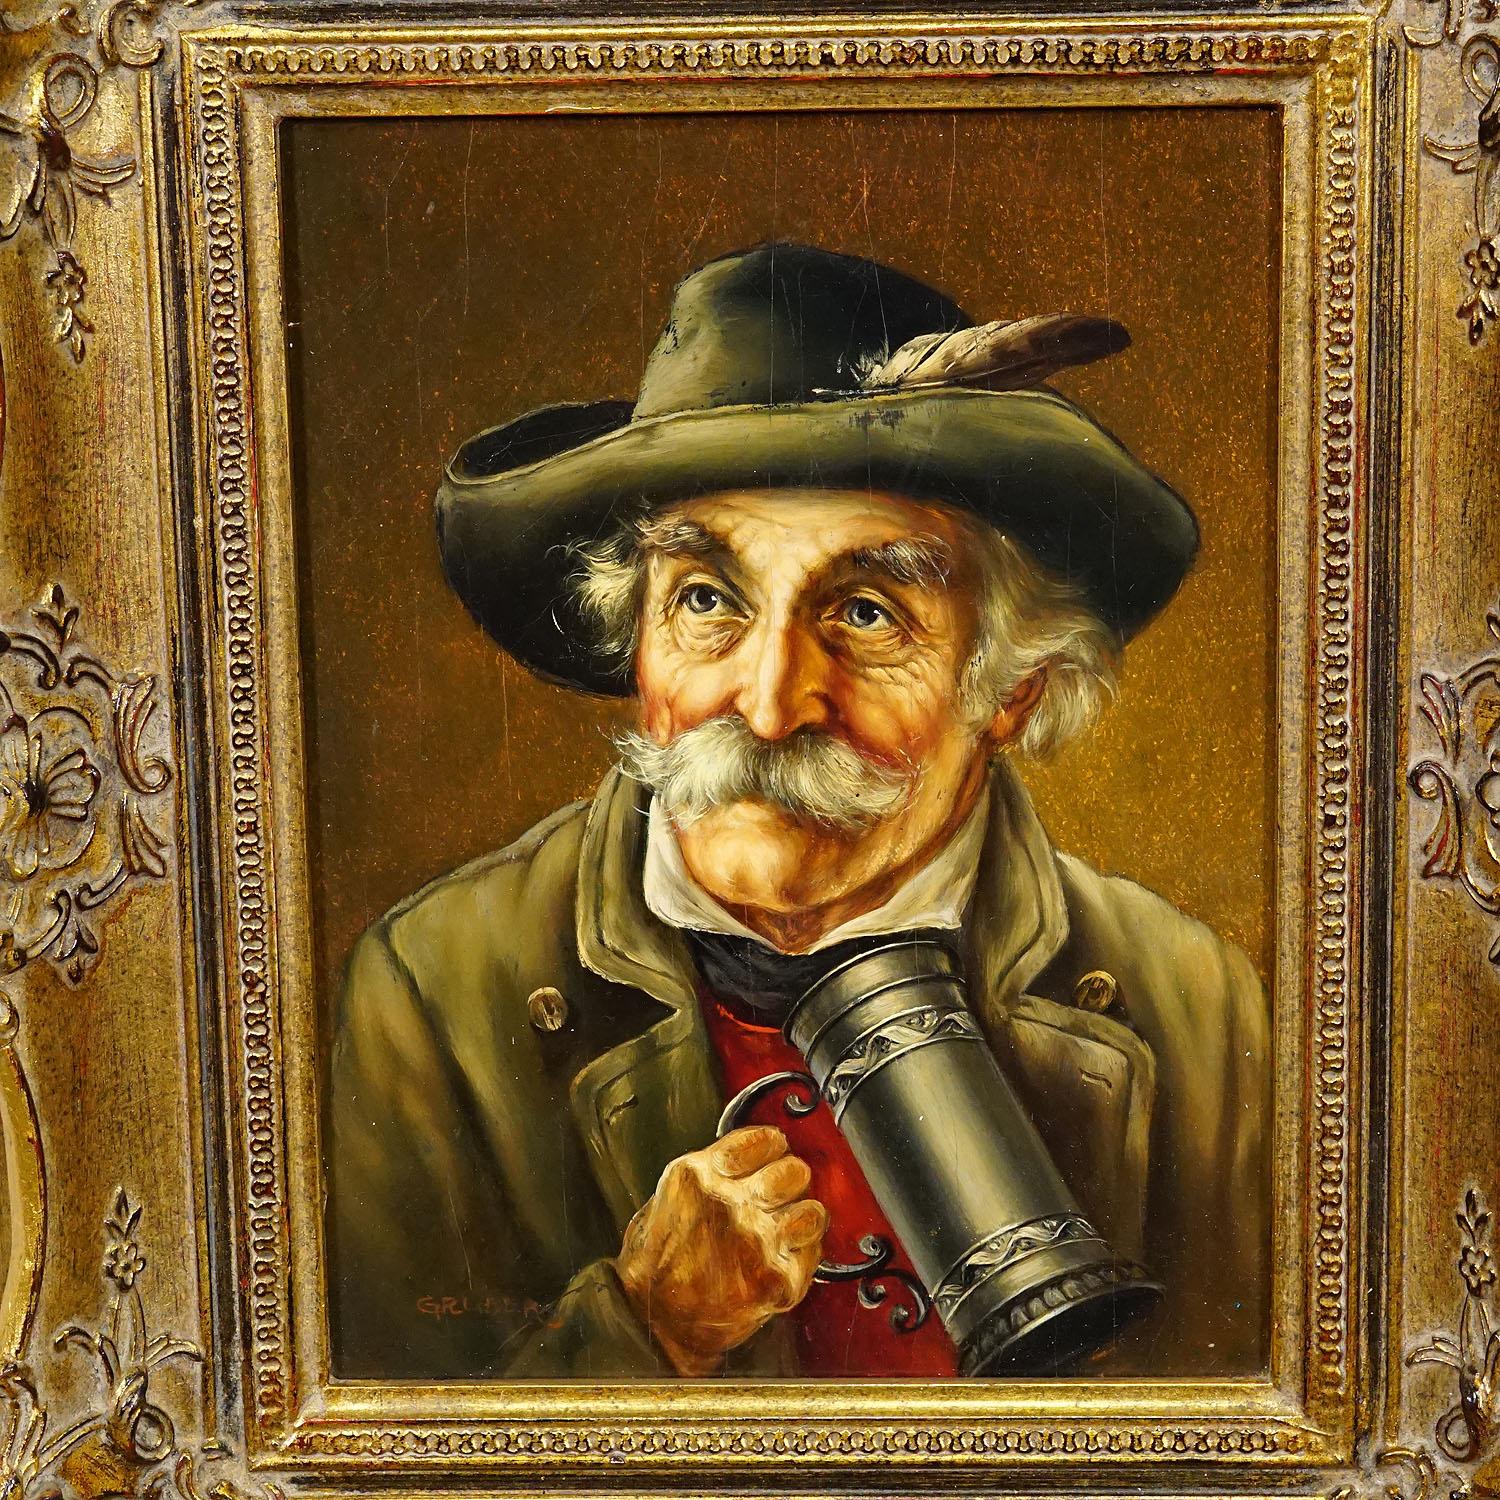 German J. Gruber - Portrait of a Bavarian Folksy Man with Beer Mug, Oil on Wood For Sale